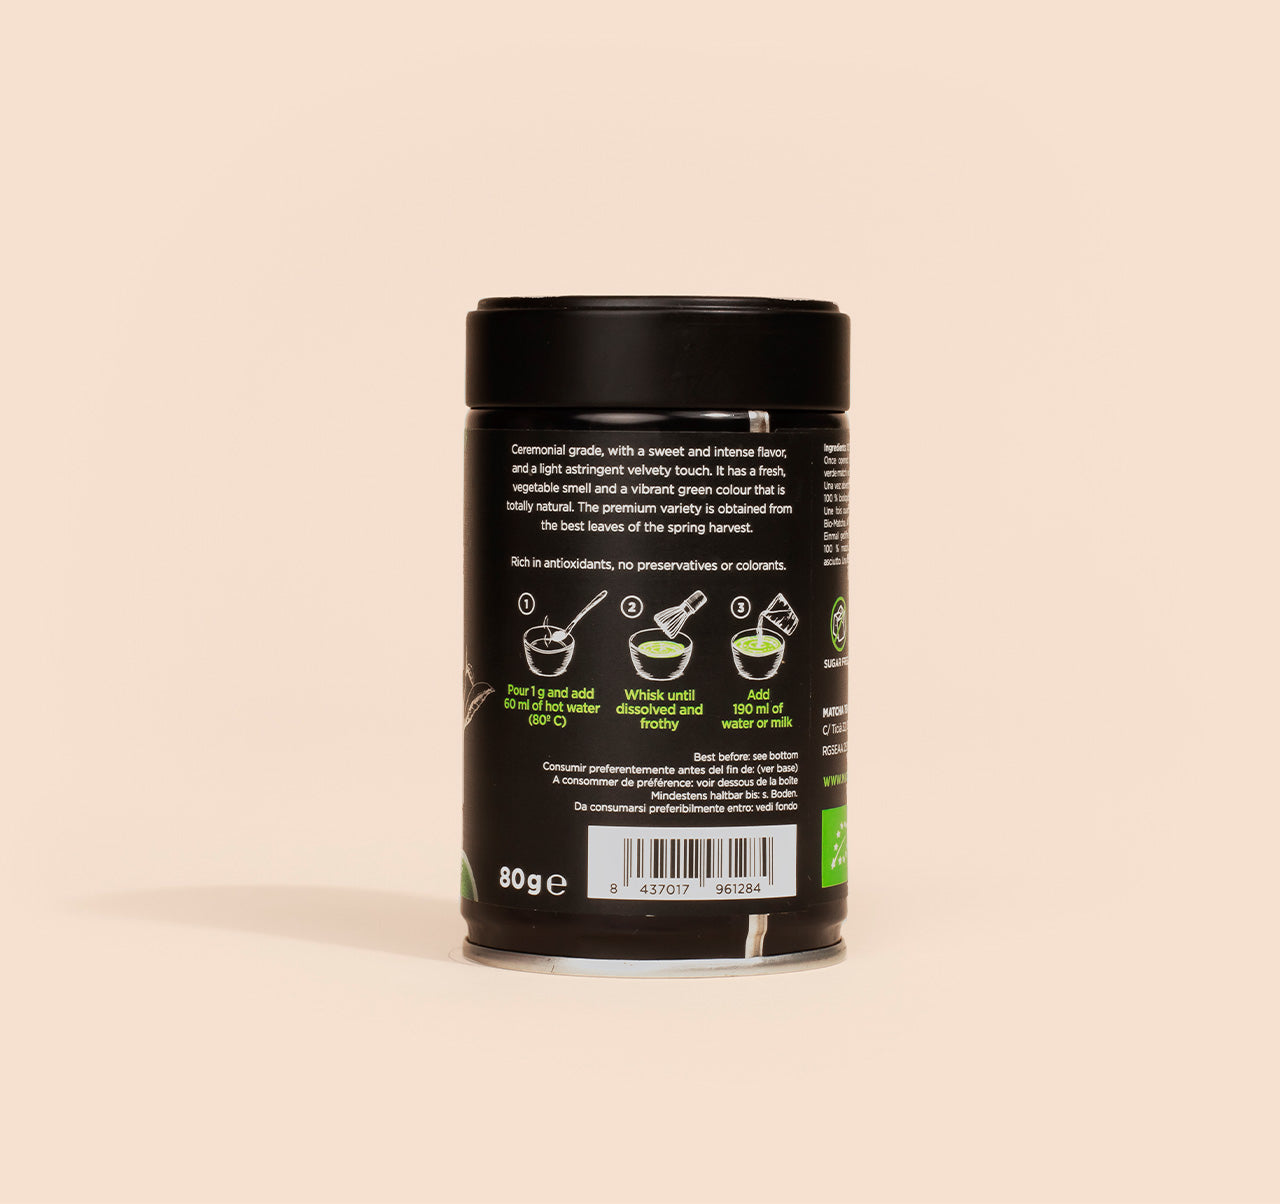 Comprar Te verde Matcha Japón Bio Premium 30 gr - Sabor a Té ®